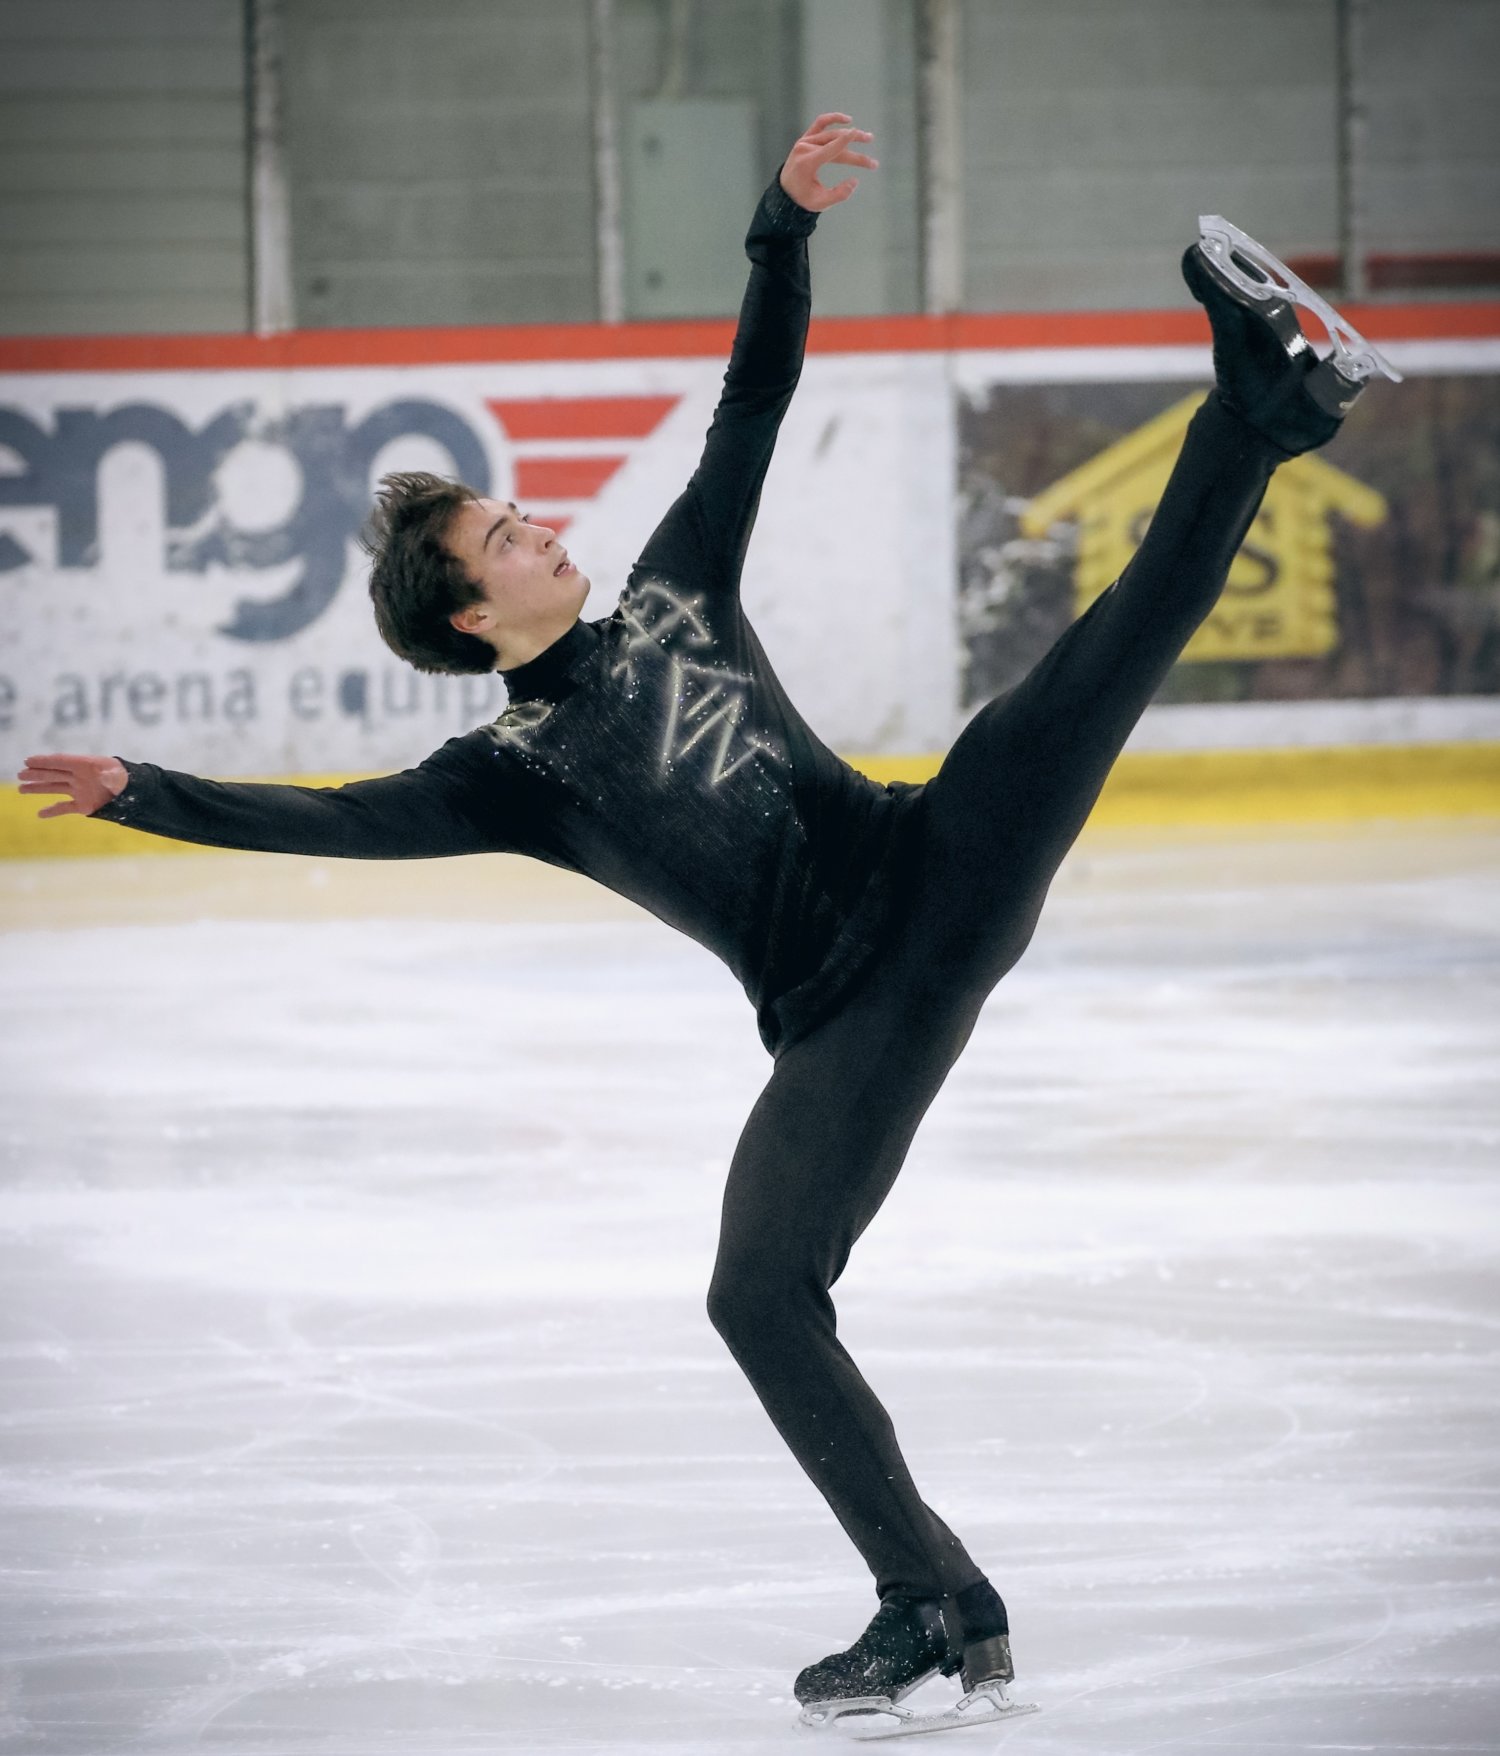 Henry-privett-mendoza-figure-skating